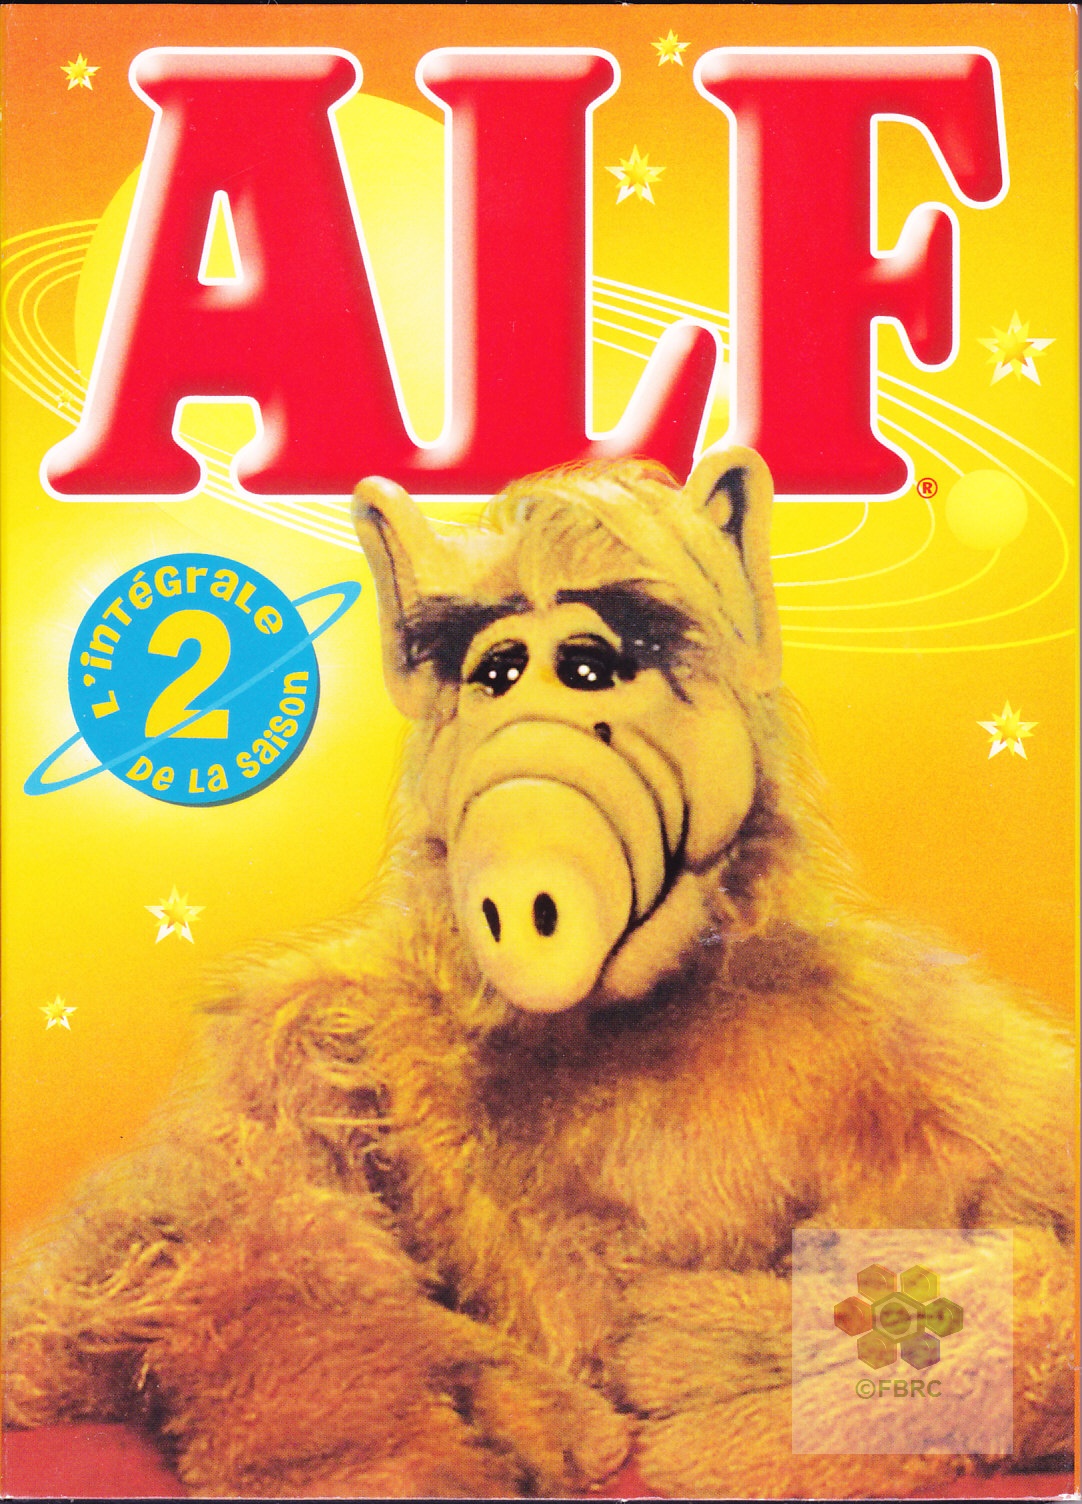 Alf - Season 2 (DVD, 2005, 4-Disc Set) for sale online | eBay